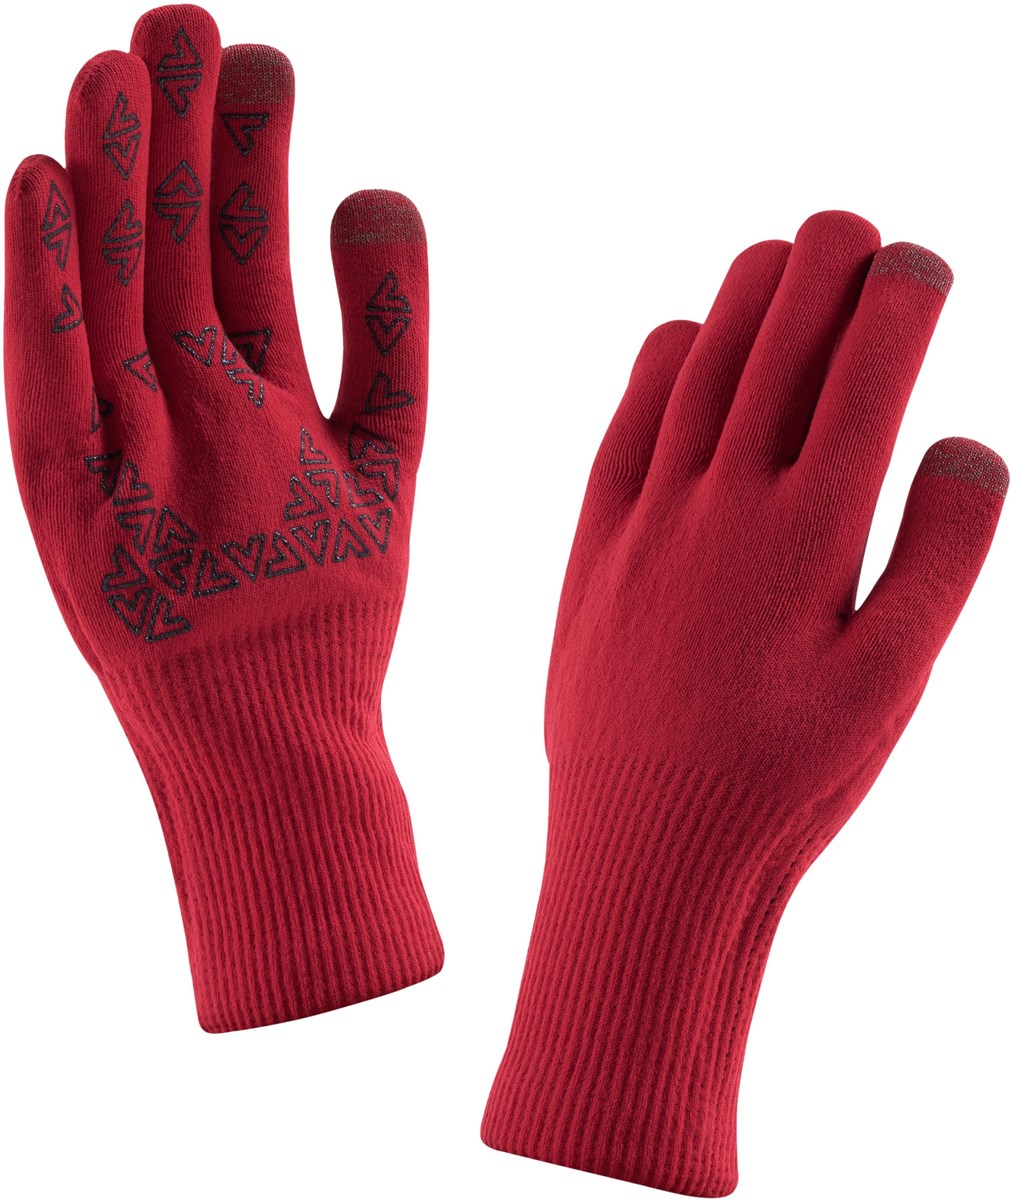 SealSkinz Ultra Grip Road Long Finger Gloves